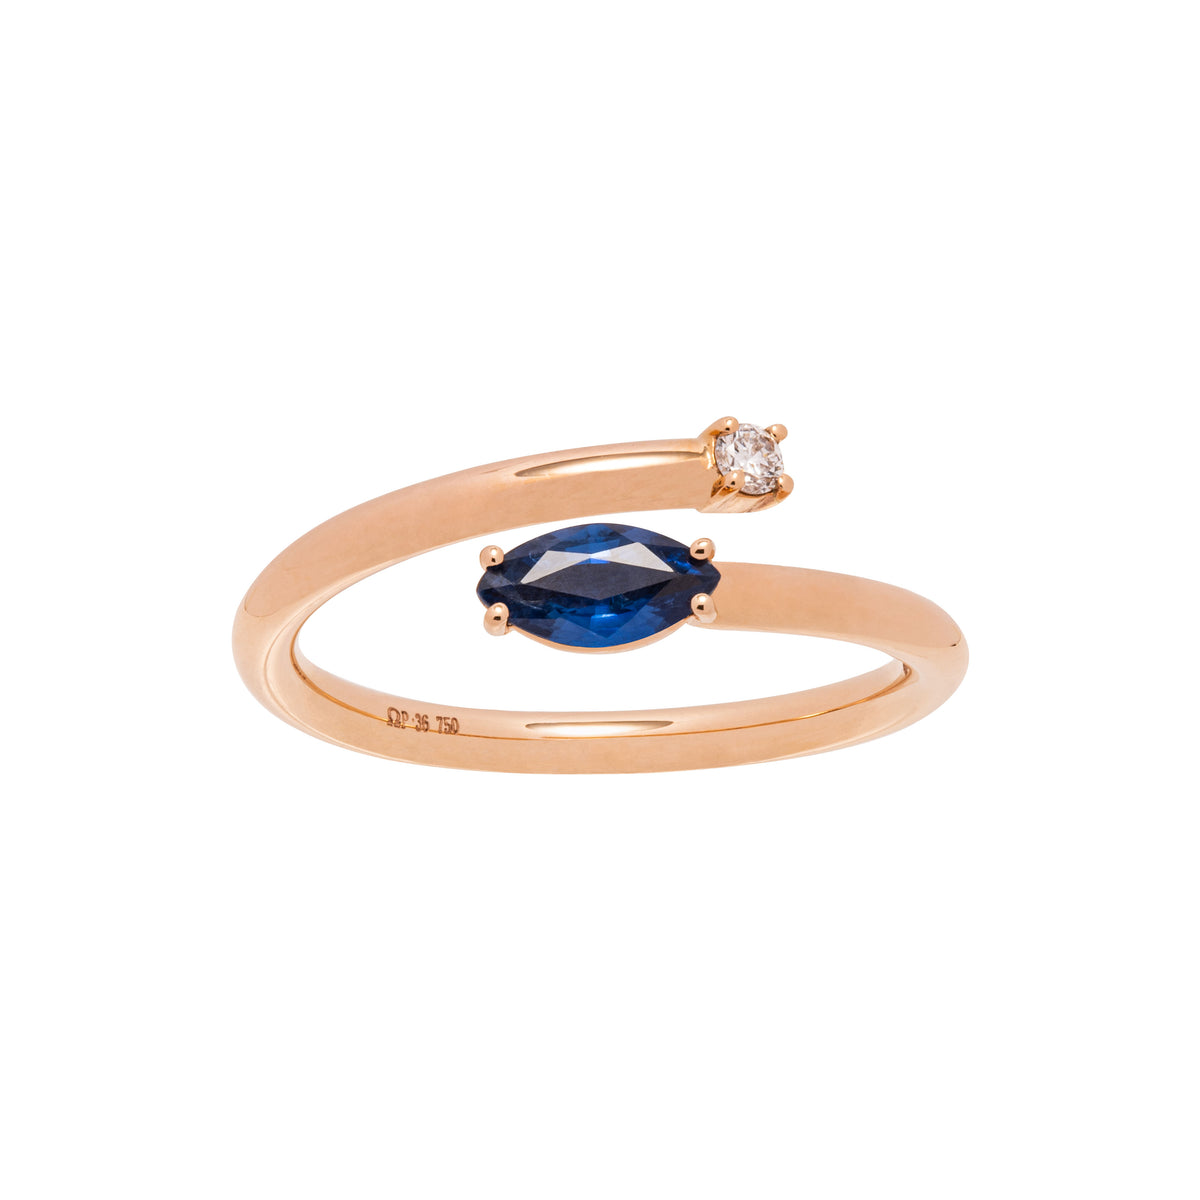 Diamond and sapphire ring. Blue sapphire ring. Marquise shape sapphire ring. Blue stone ring